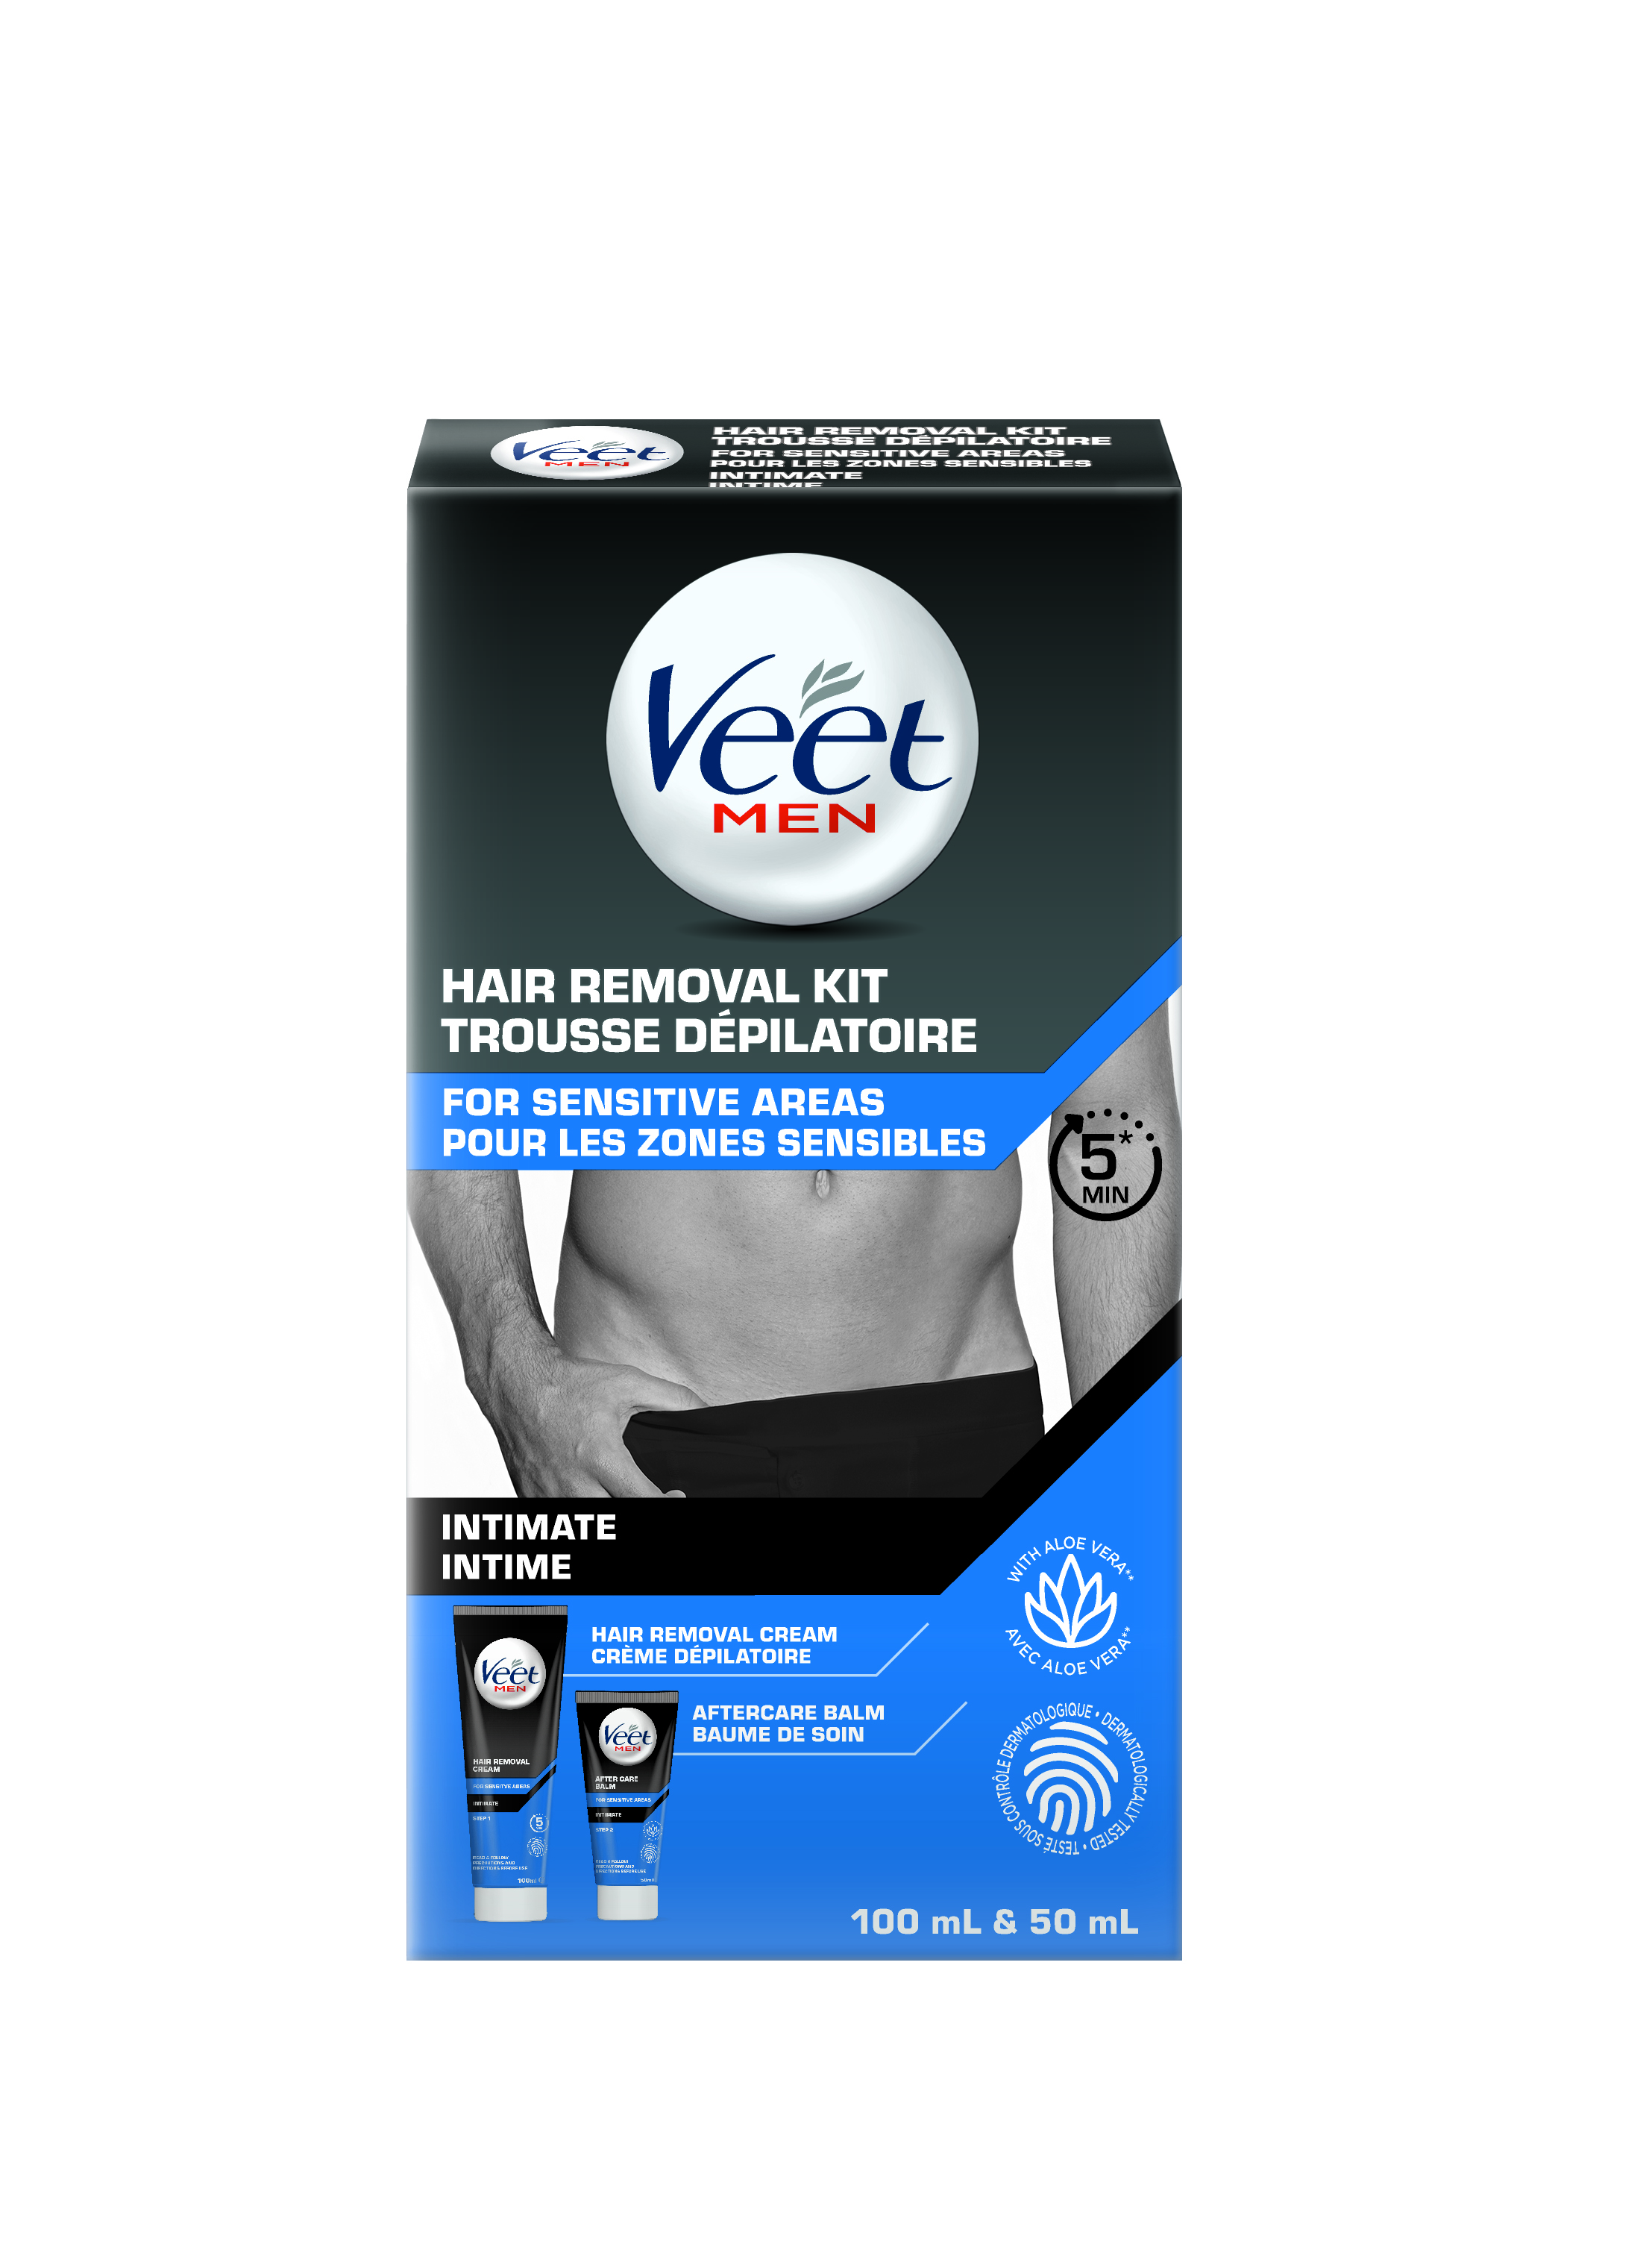 Veet® Intimate Hair Removal Kit - Men (Canada) - Hair Removal Cream